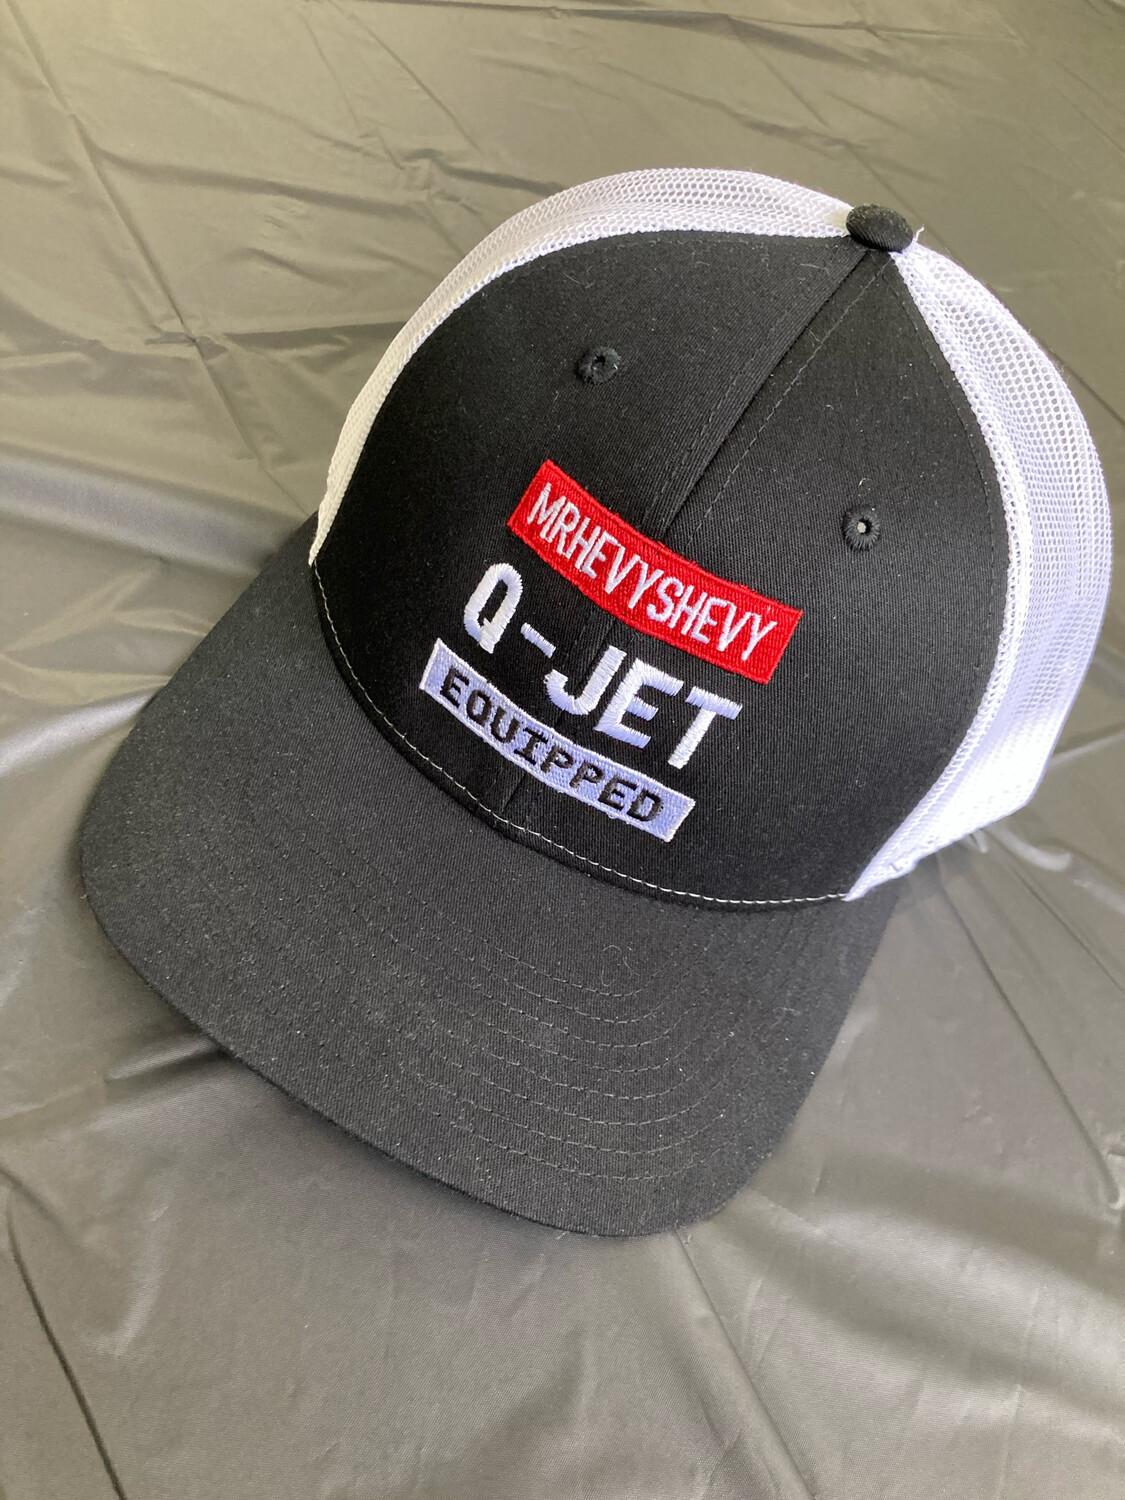 MRHEVYSHEVY Q-JET Equipped Trucker Style Hats